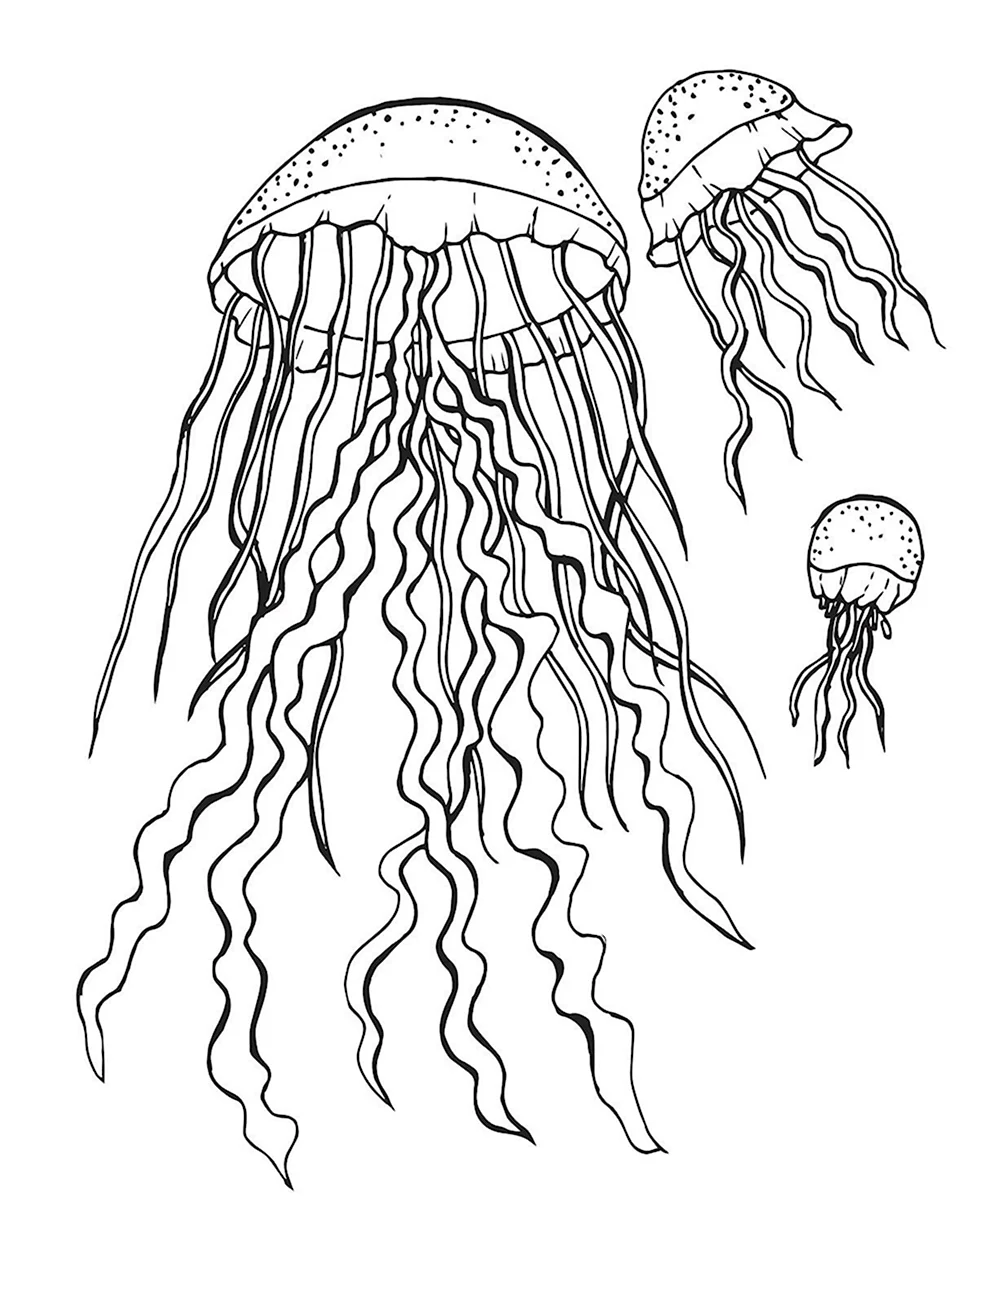 Медуза корнерот